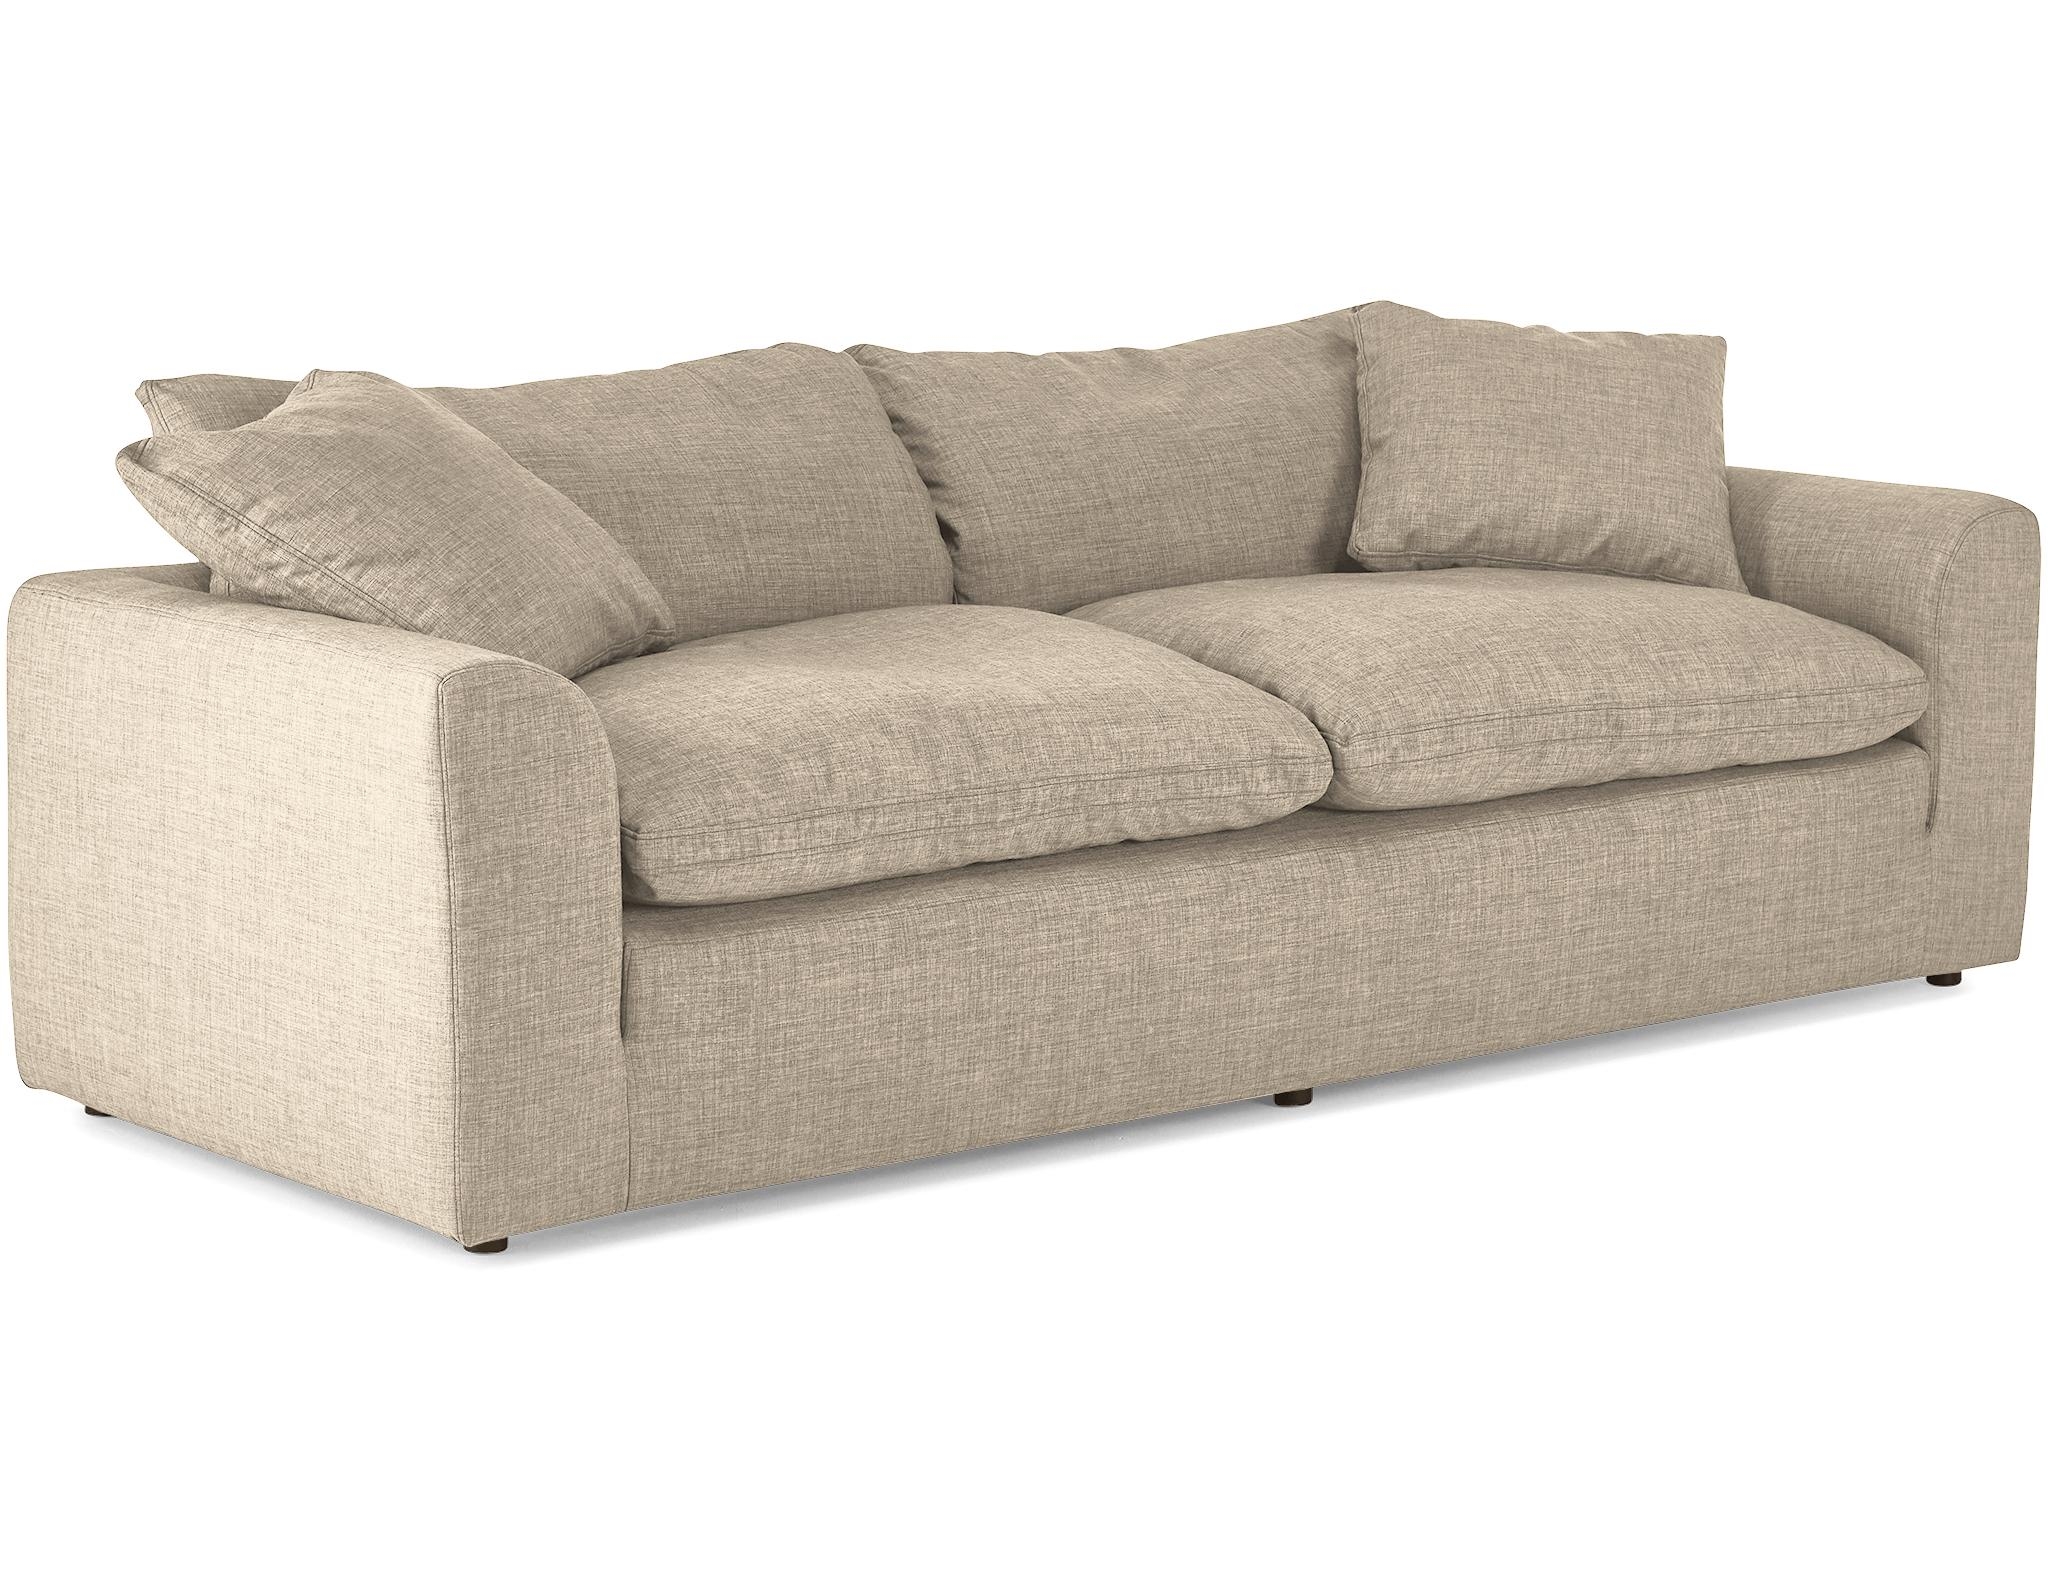 Beige/White Bryant Mid Century Modern Sofa - Cody Sandstone - Image 1